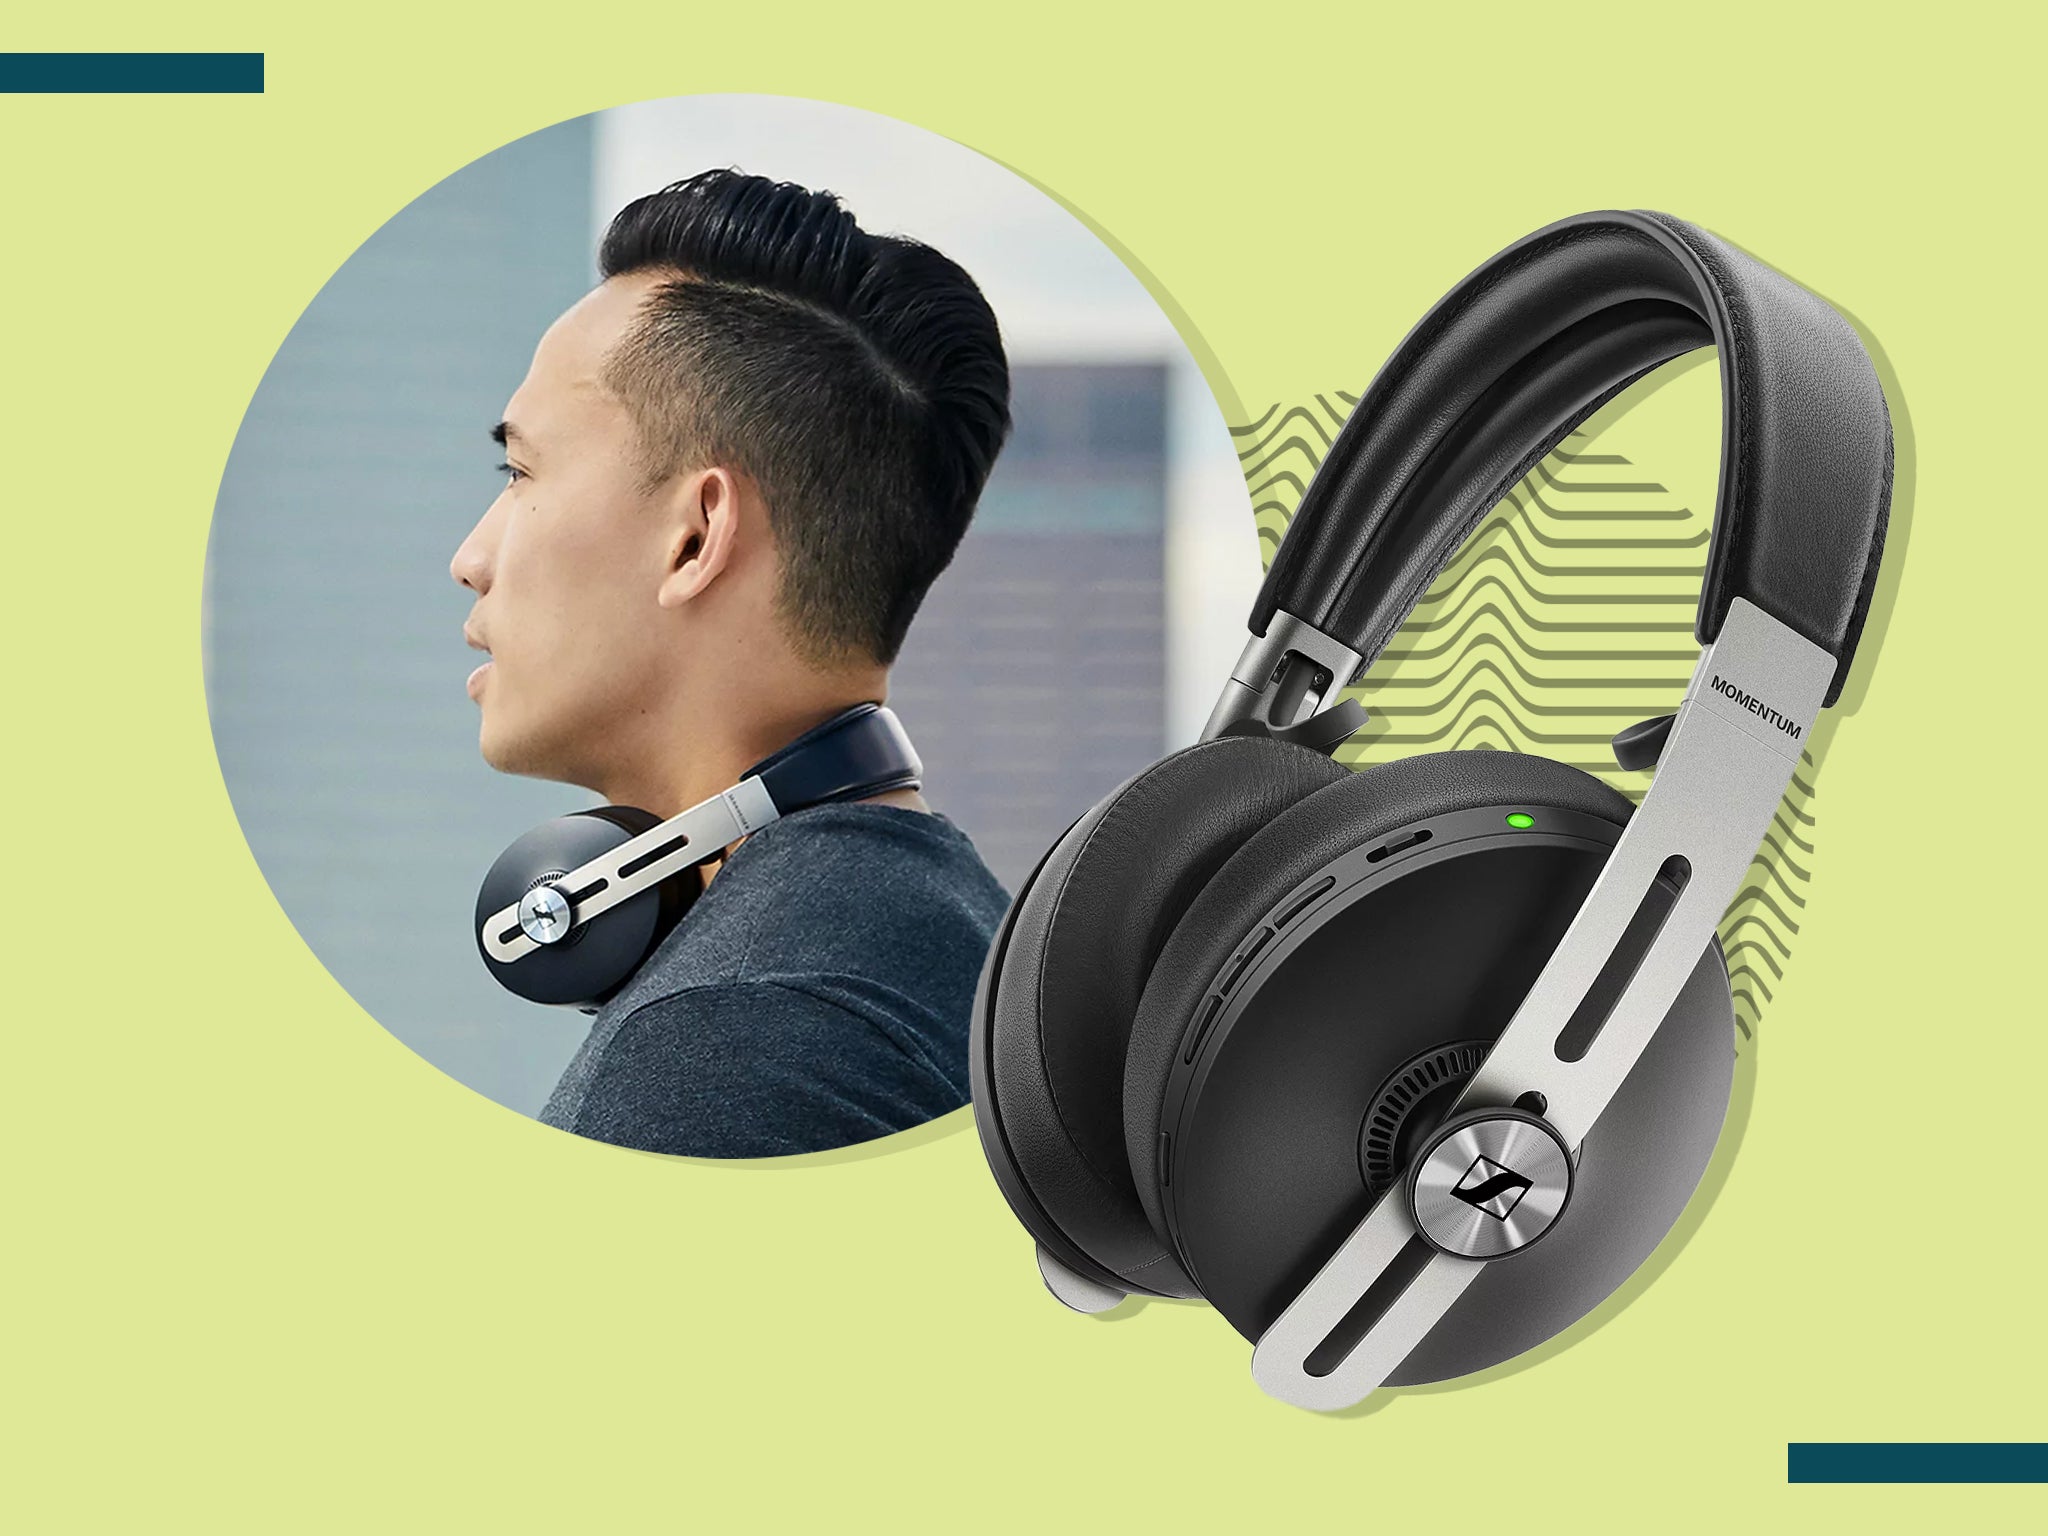 Sennheiser momentum true wireless review: We put the headphones to